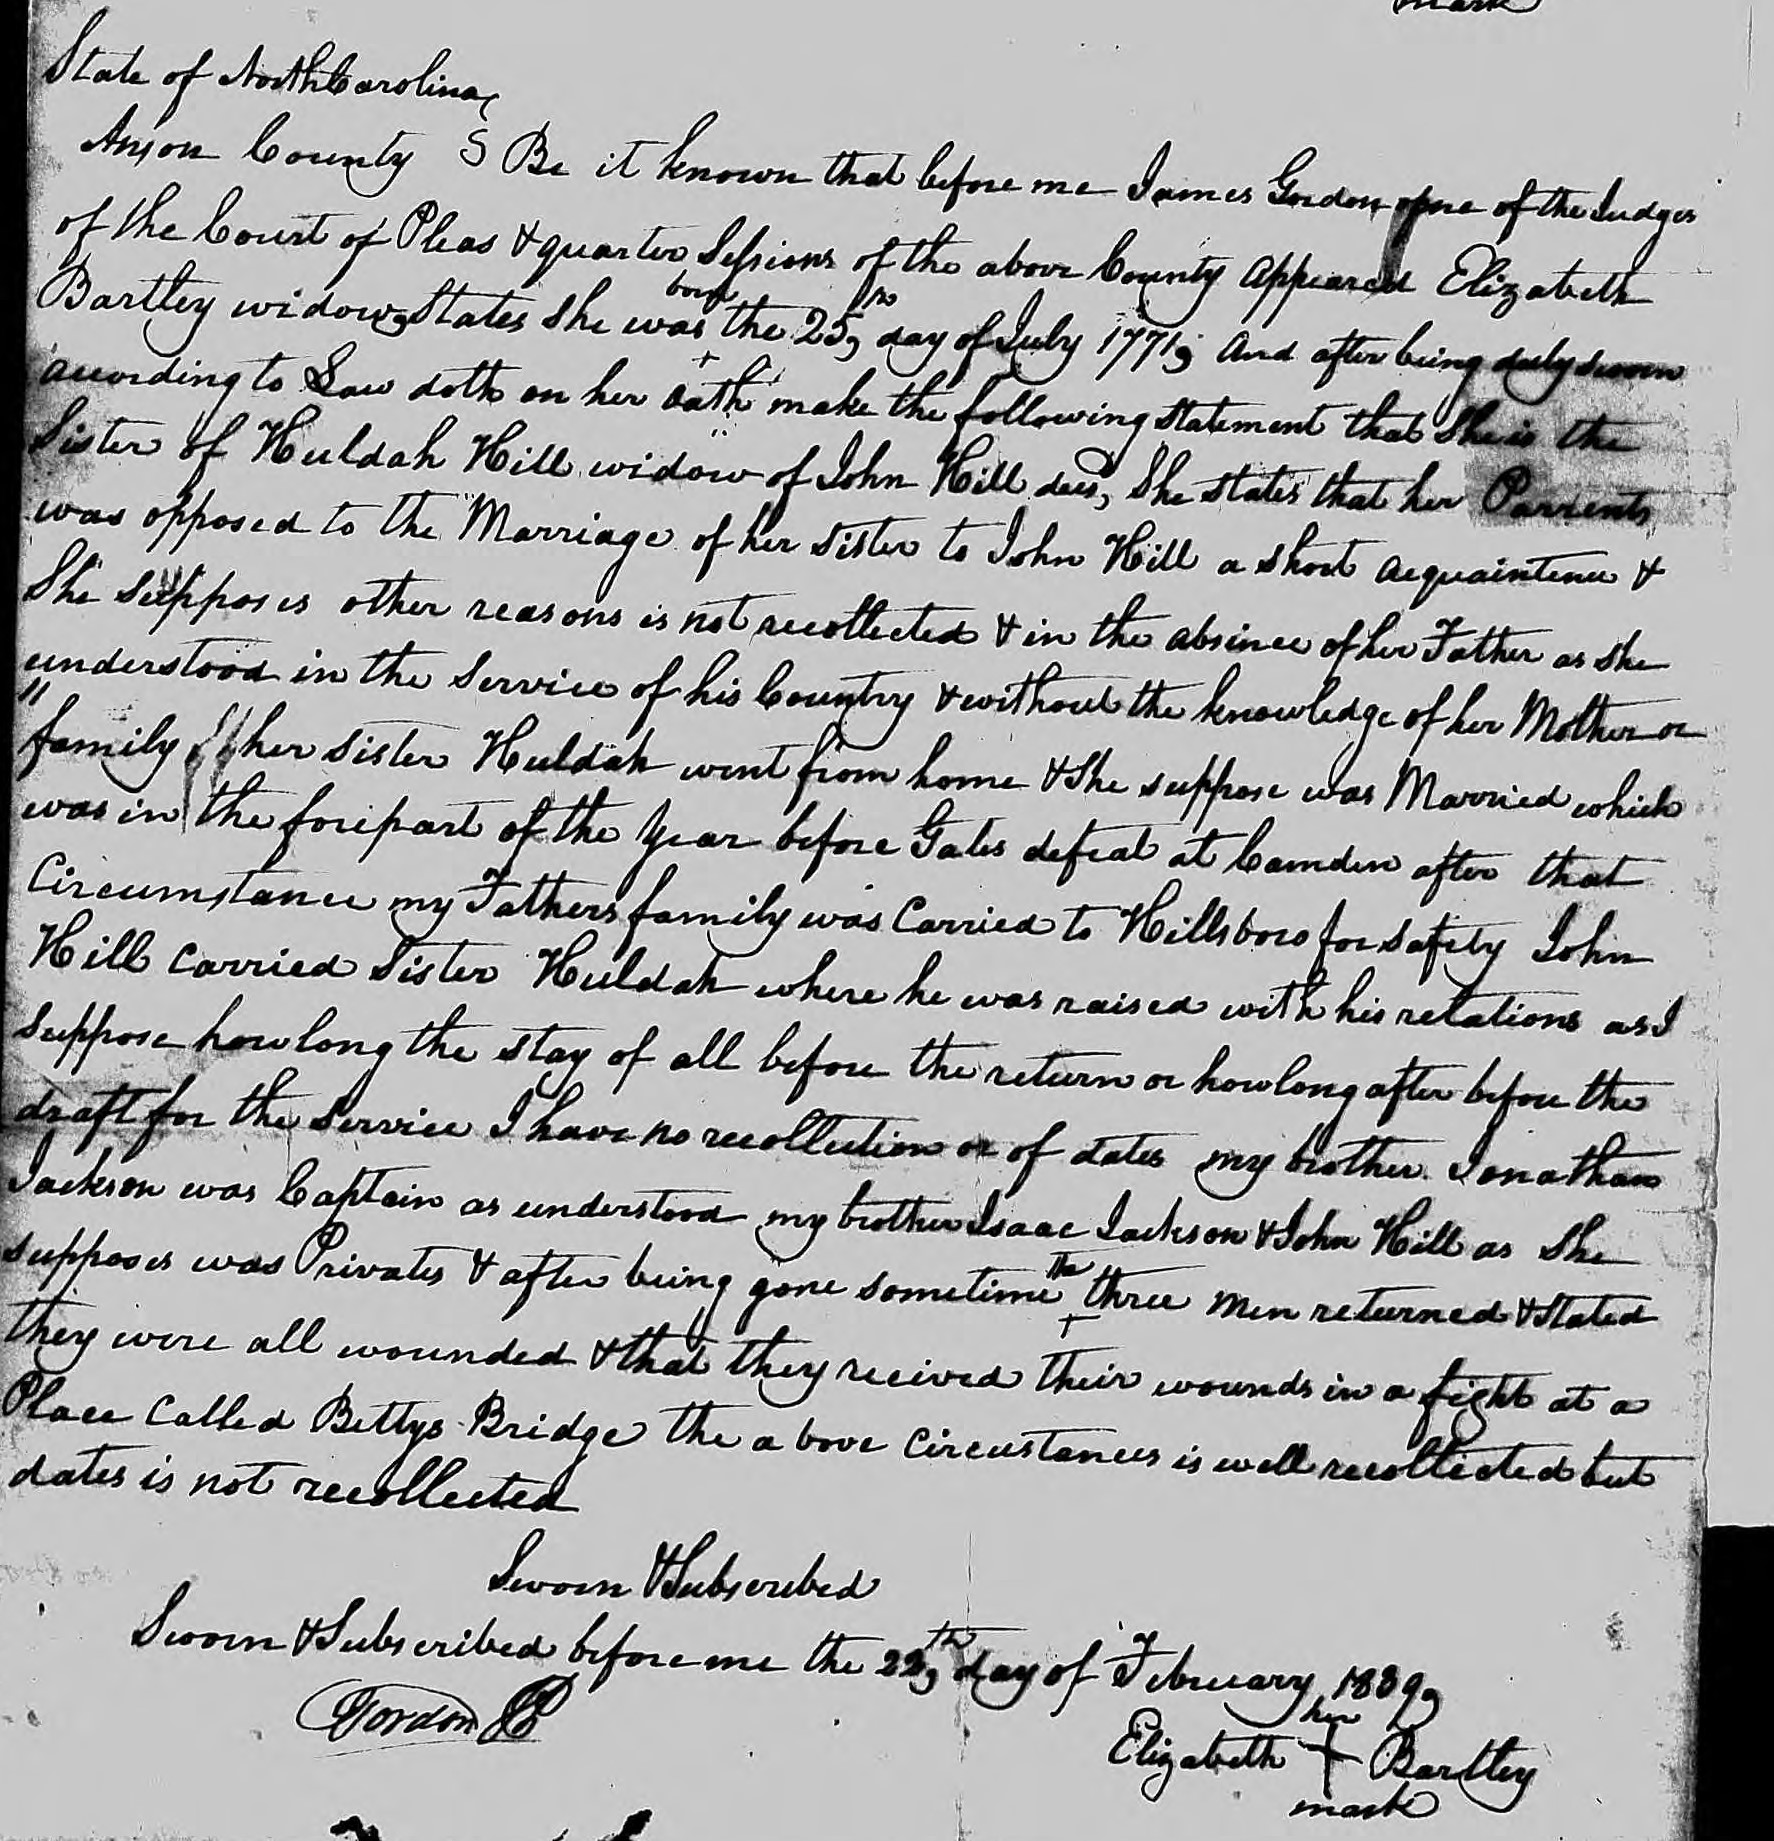 Affidavit of Elizabeth Bartley in support of a Pension Claim for Huldah Hill, 22 February 1839